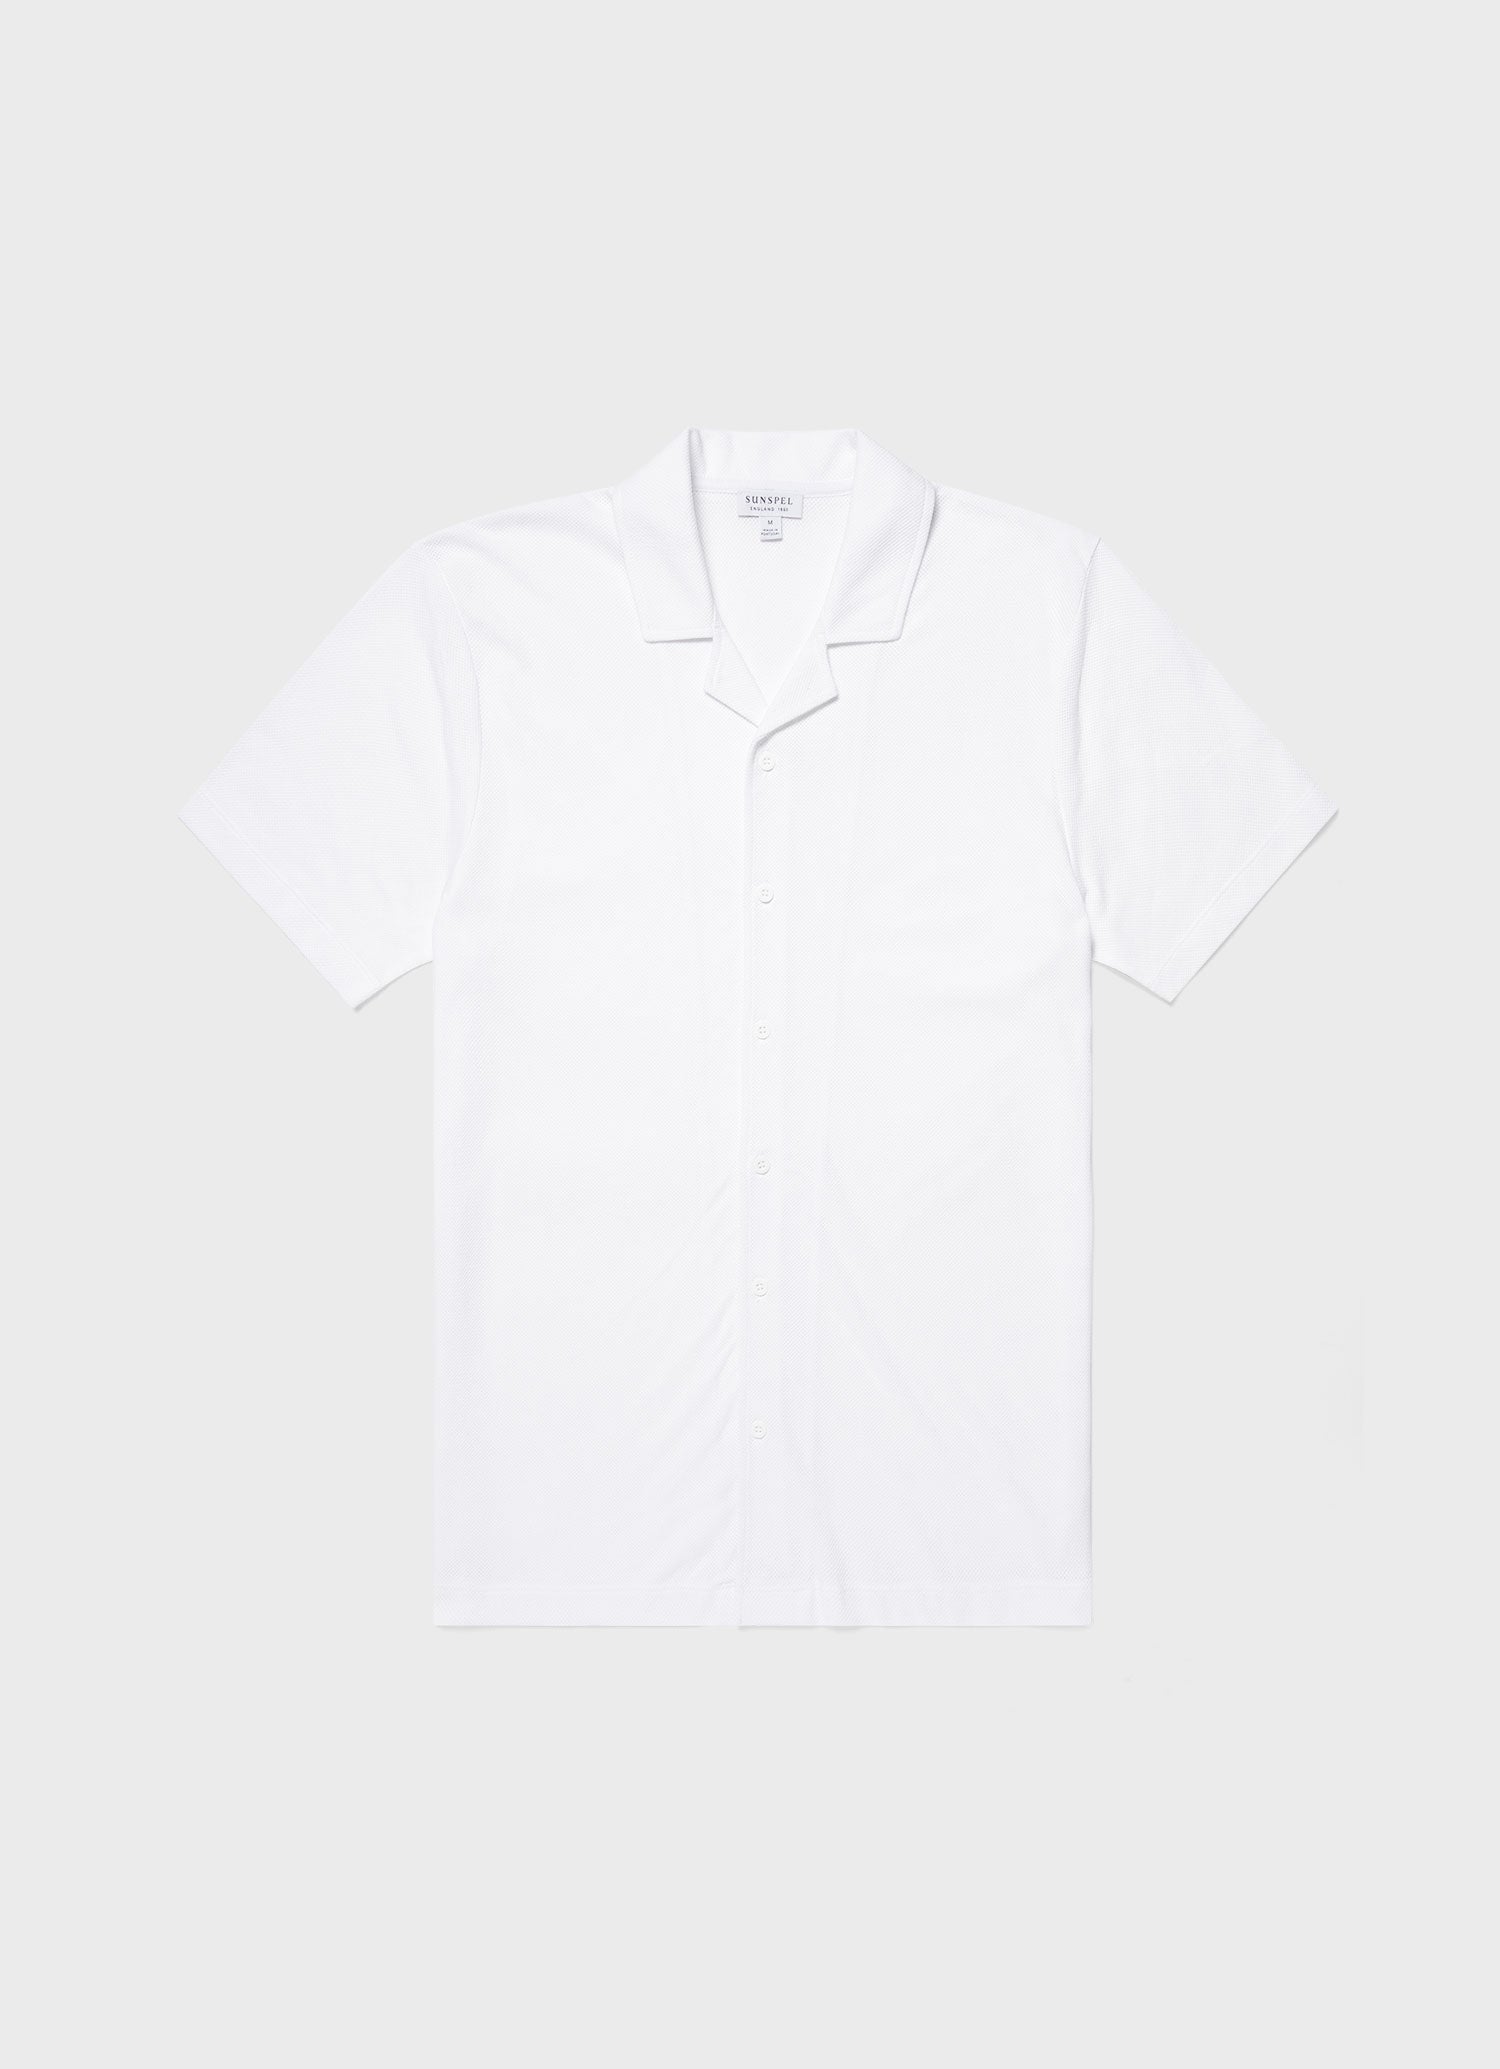 Profound Western Landscape Camp Shirt in White for Men